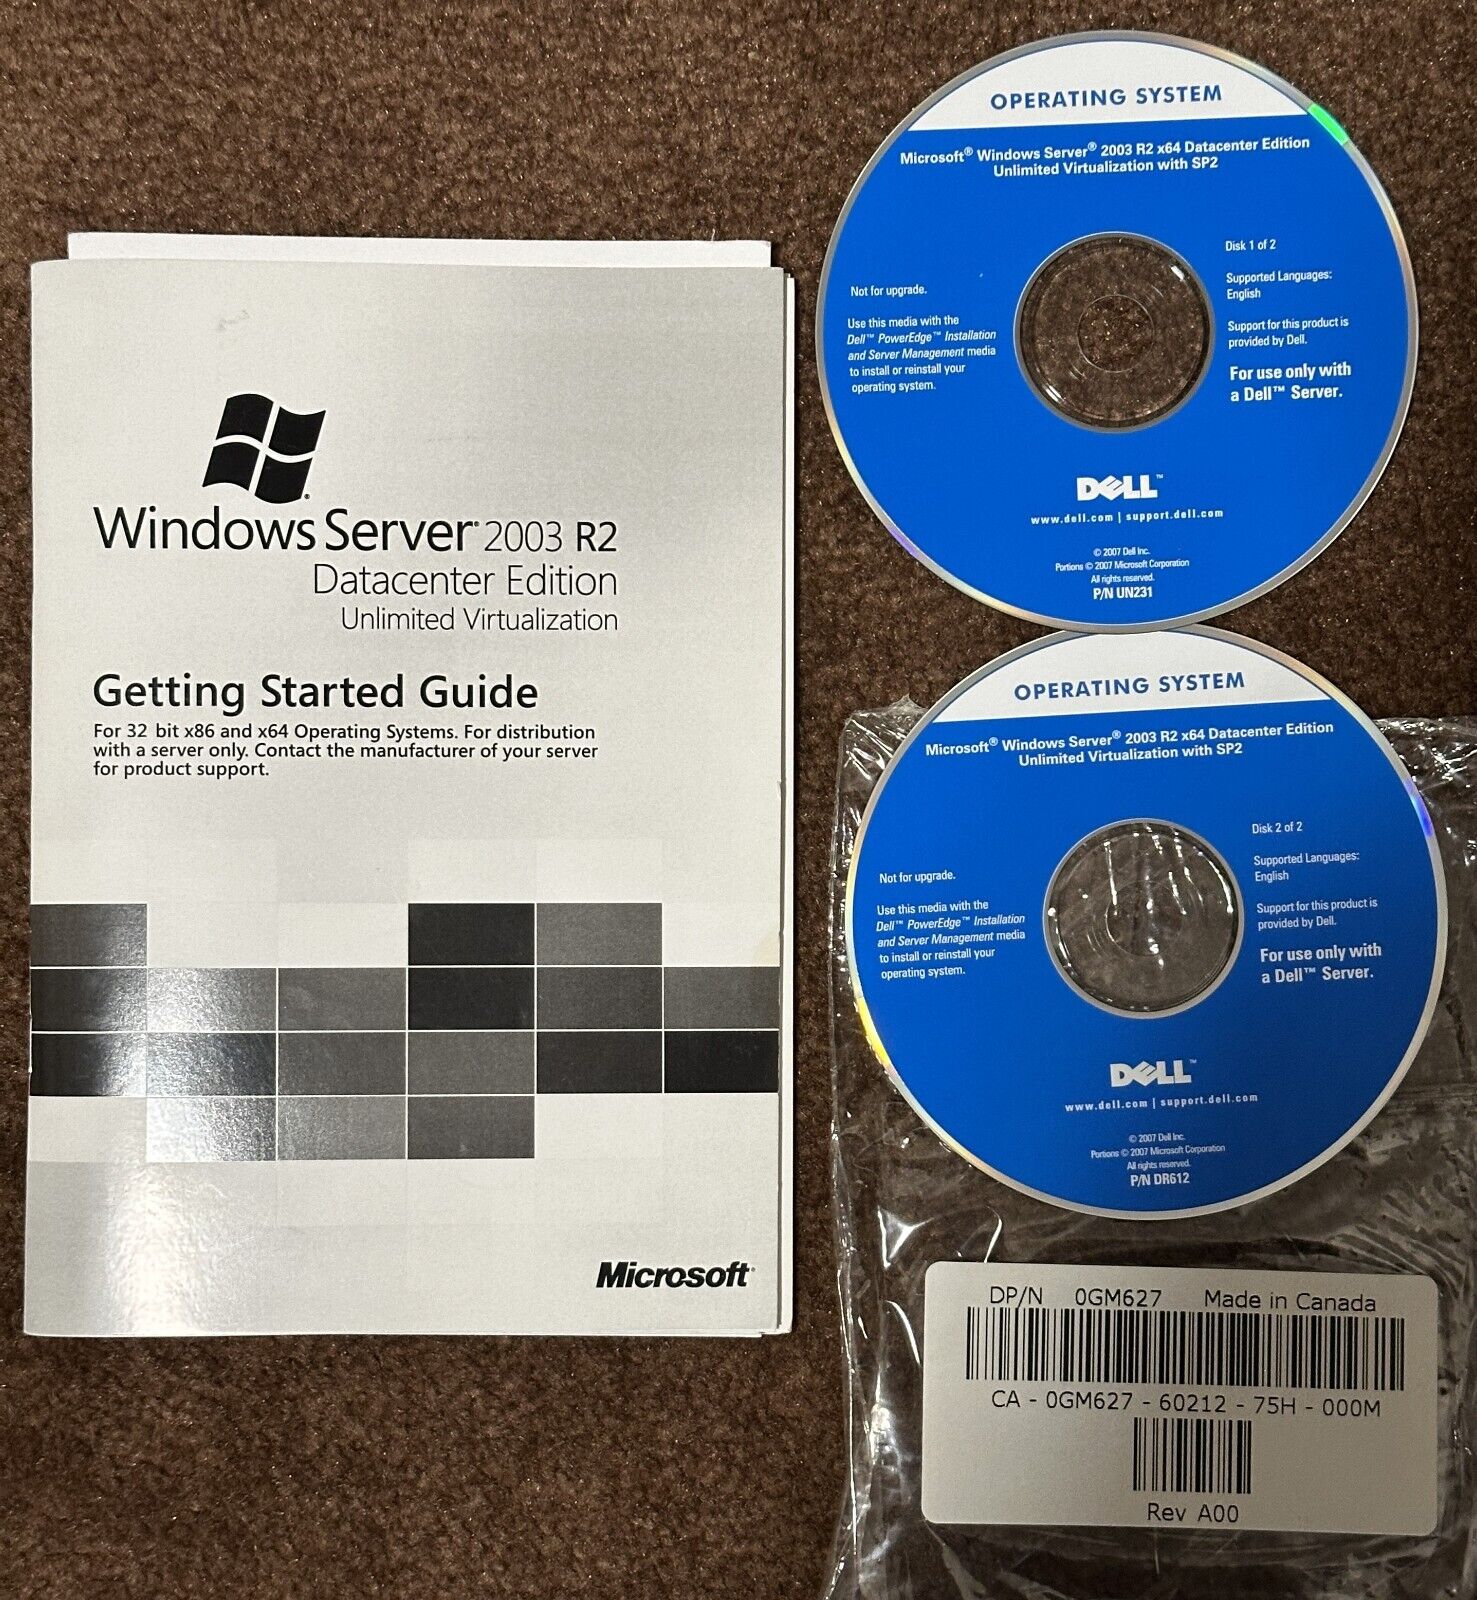 Microsoft Windows Server 2003 R2 Datacenter Edition for Dell